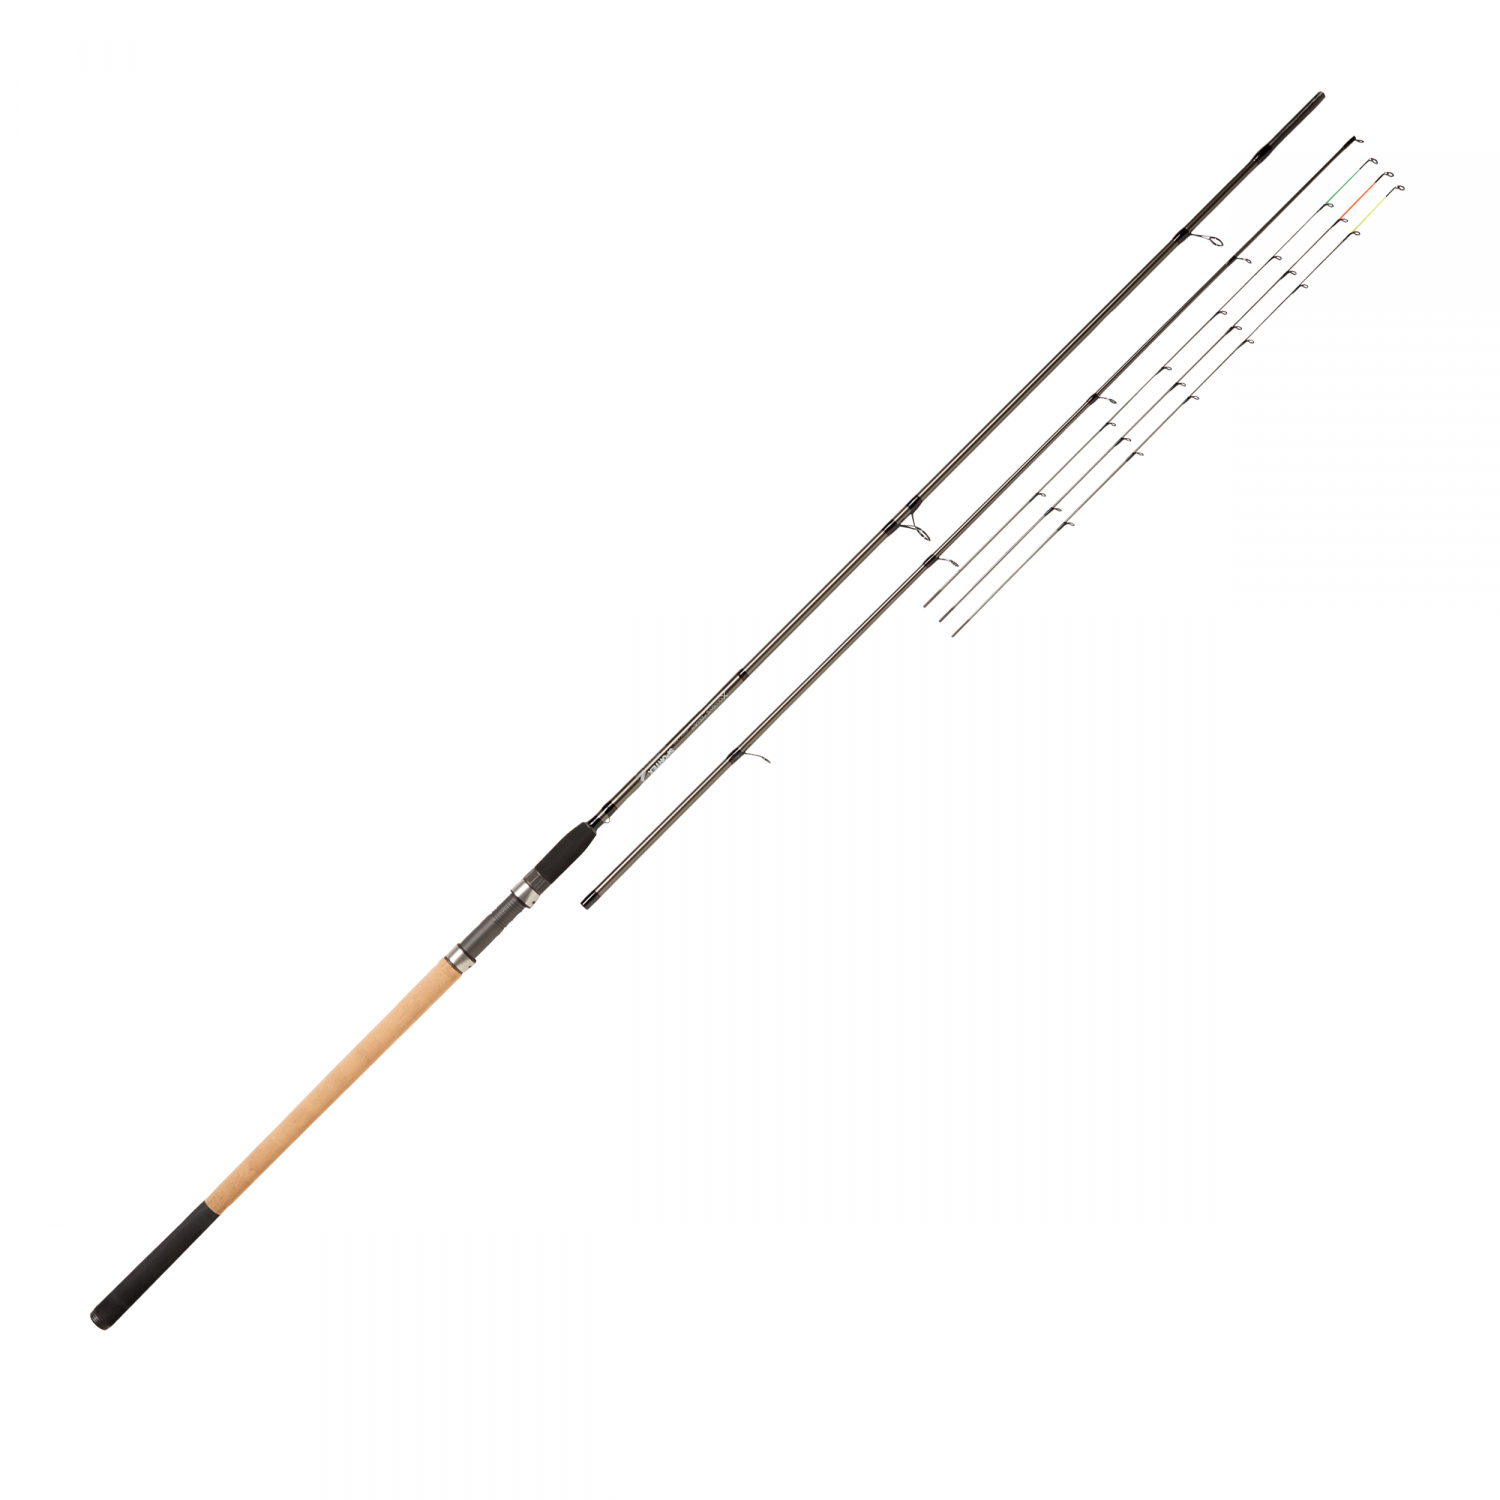 https://images.askari-sport.com/en/product/1/large/sportex-peace-fishing-rod-xclusive-medium-heavy-feeder-limited-special-edition-grey-line.jpg